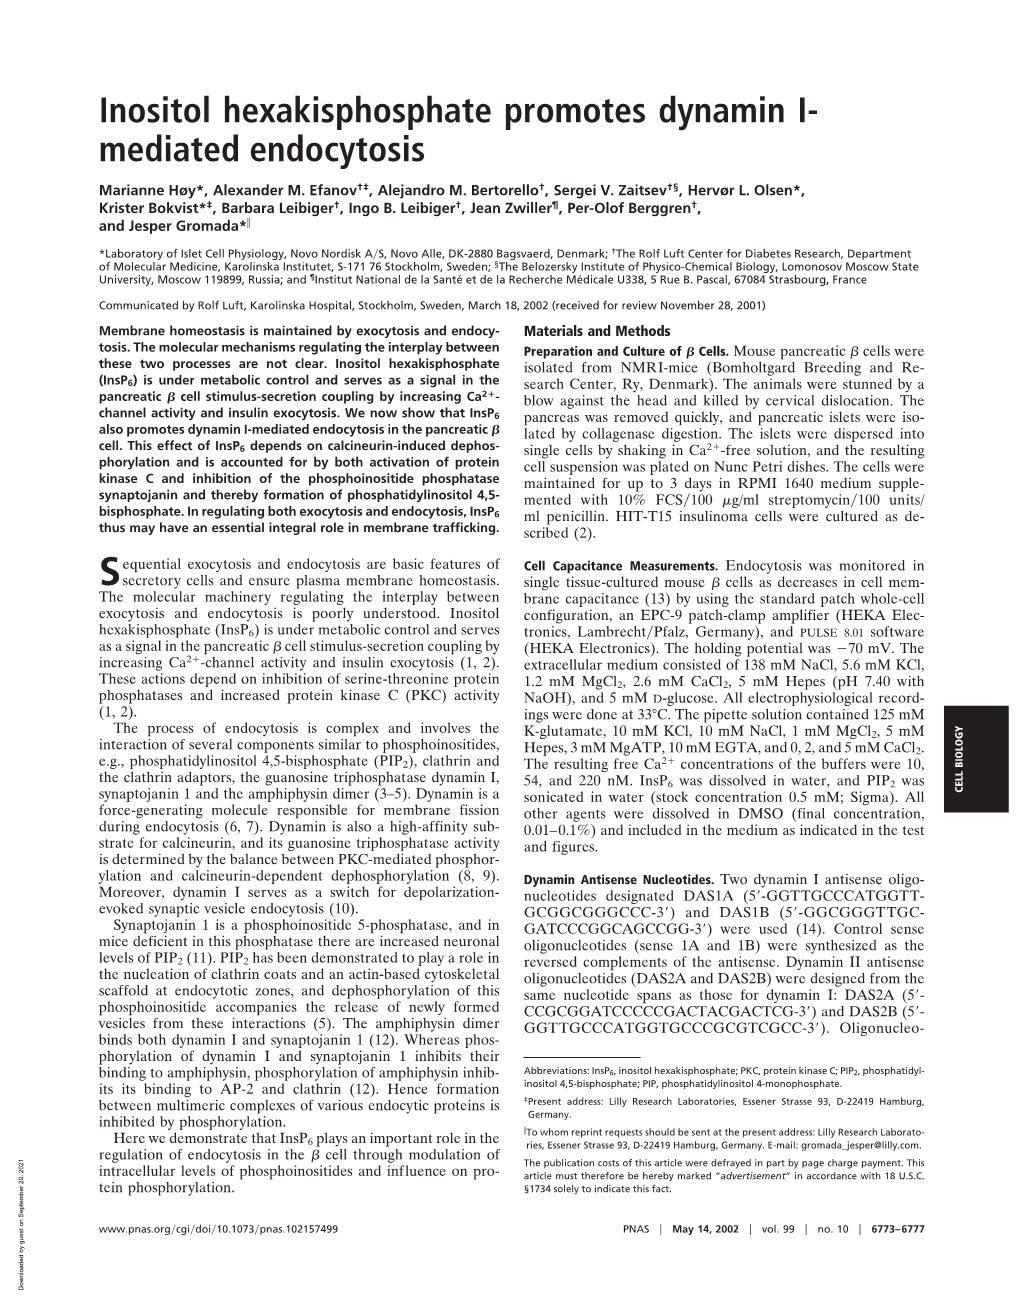 Inositol Hexakisphosphate Promotes Dynamin I- Mediated Endocytosis